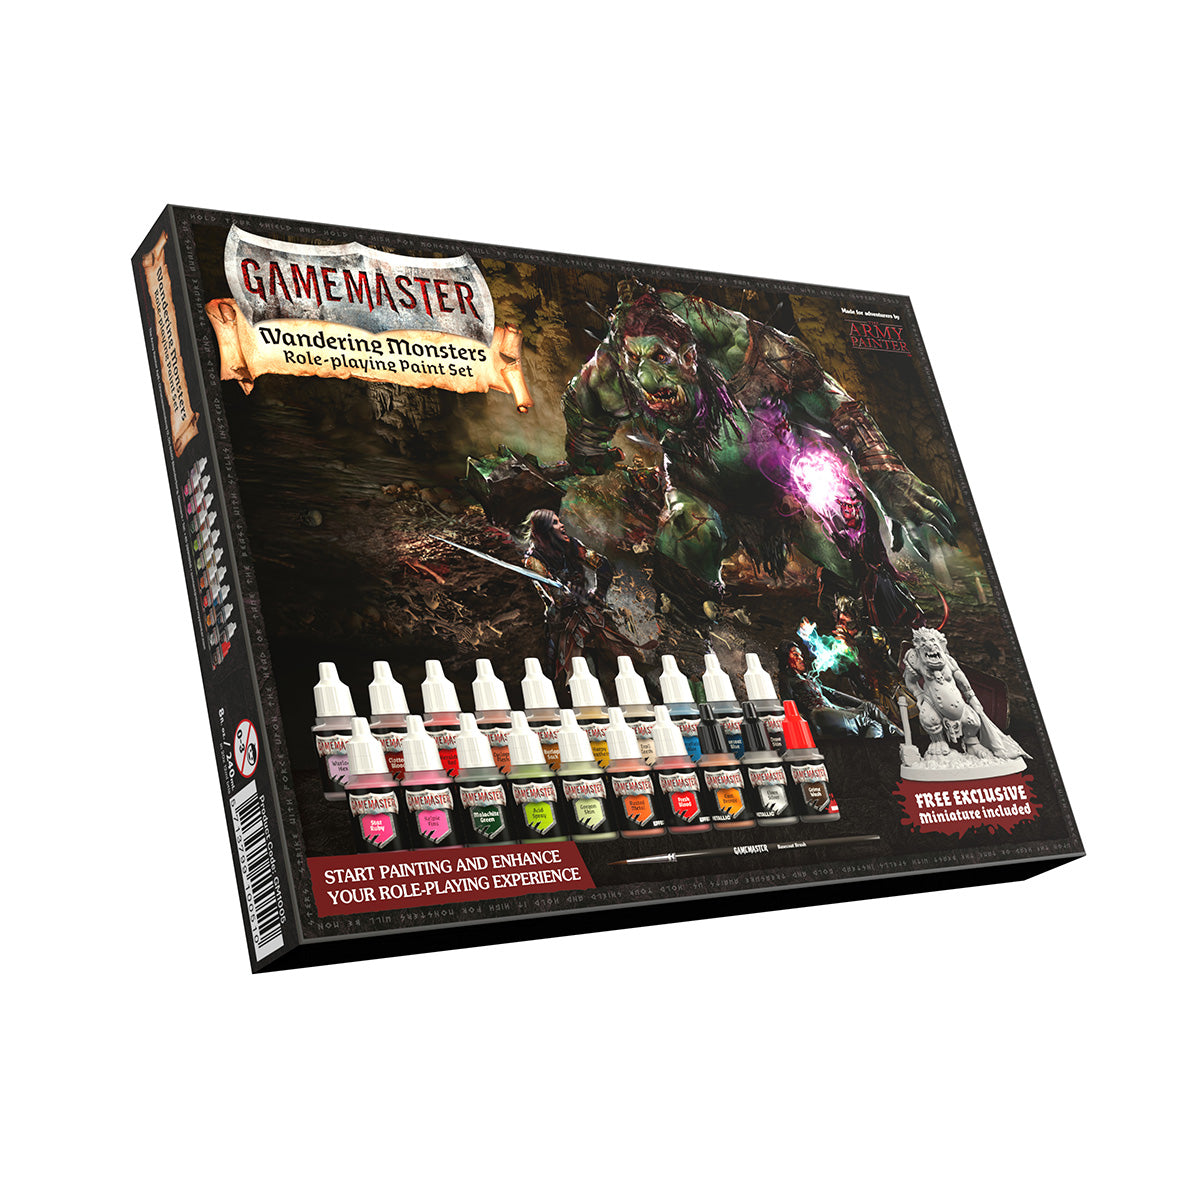 New Warhammer 40k Model + Paint Sets